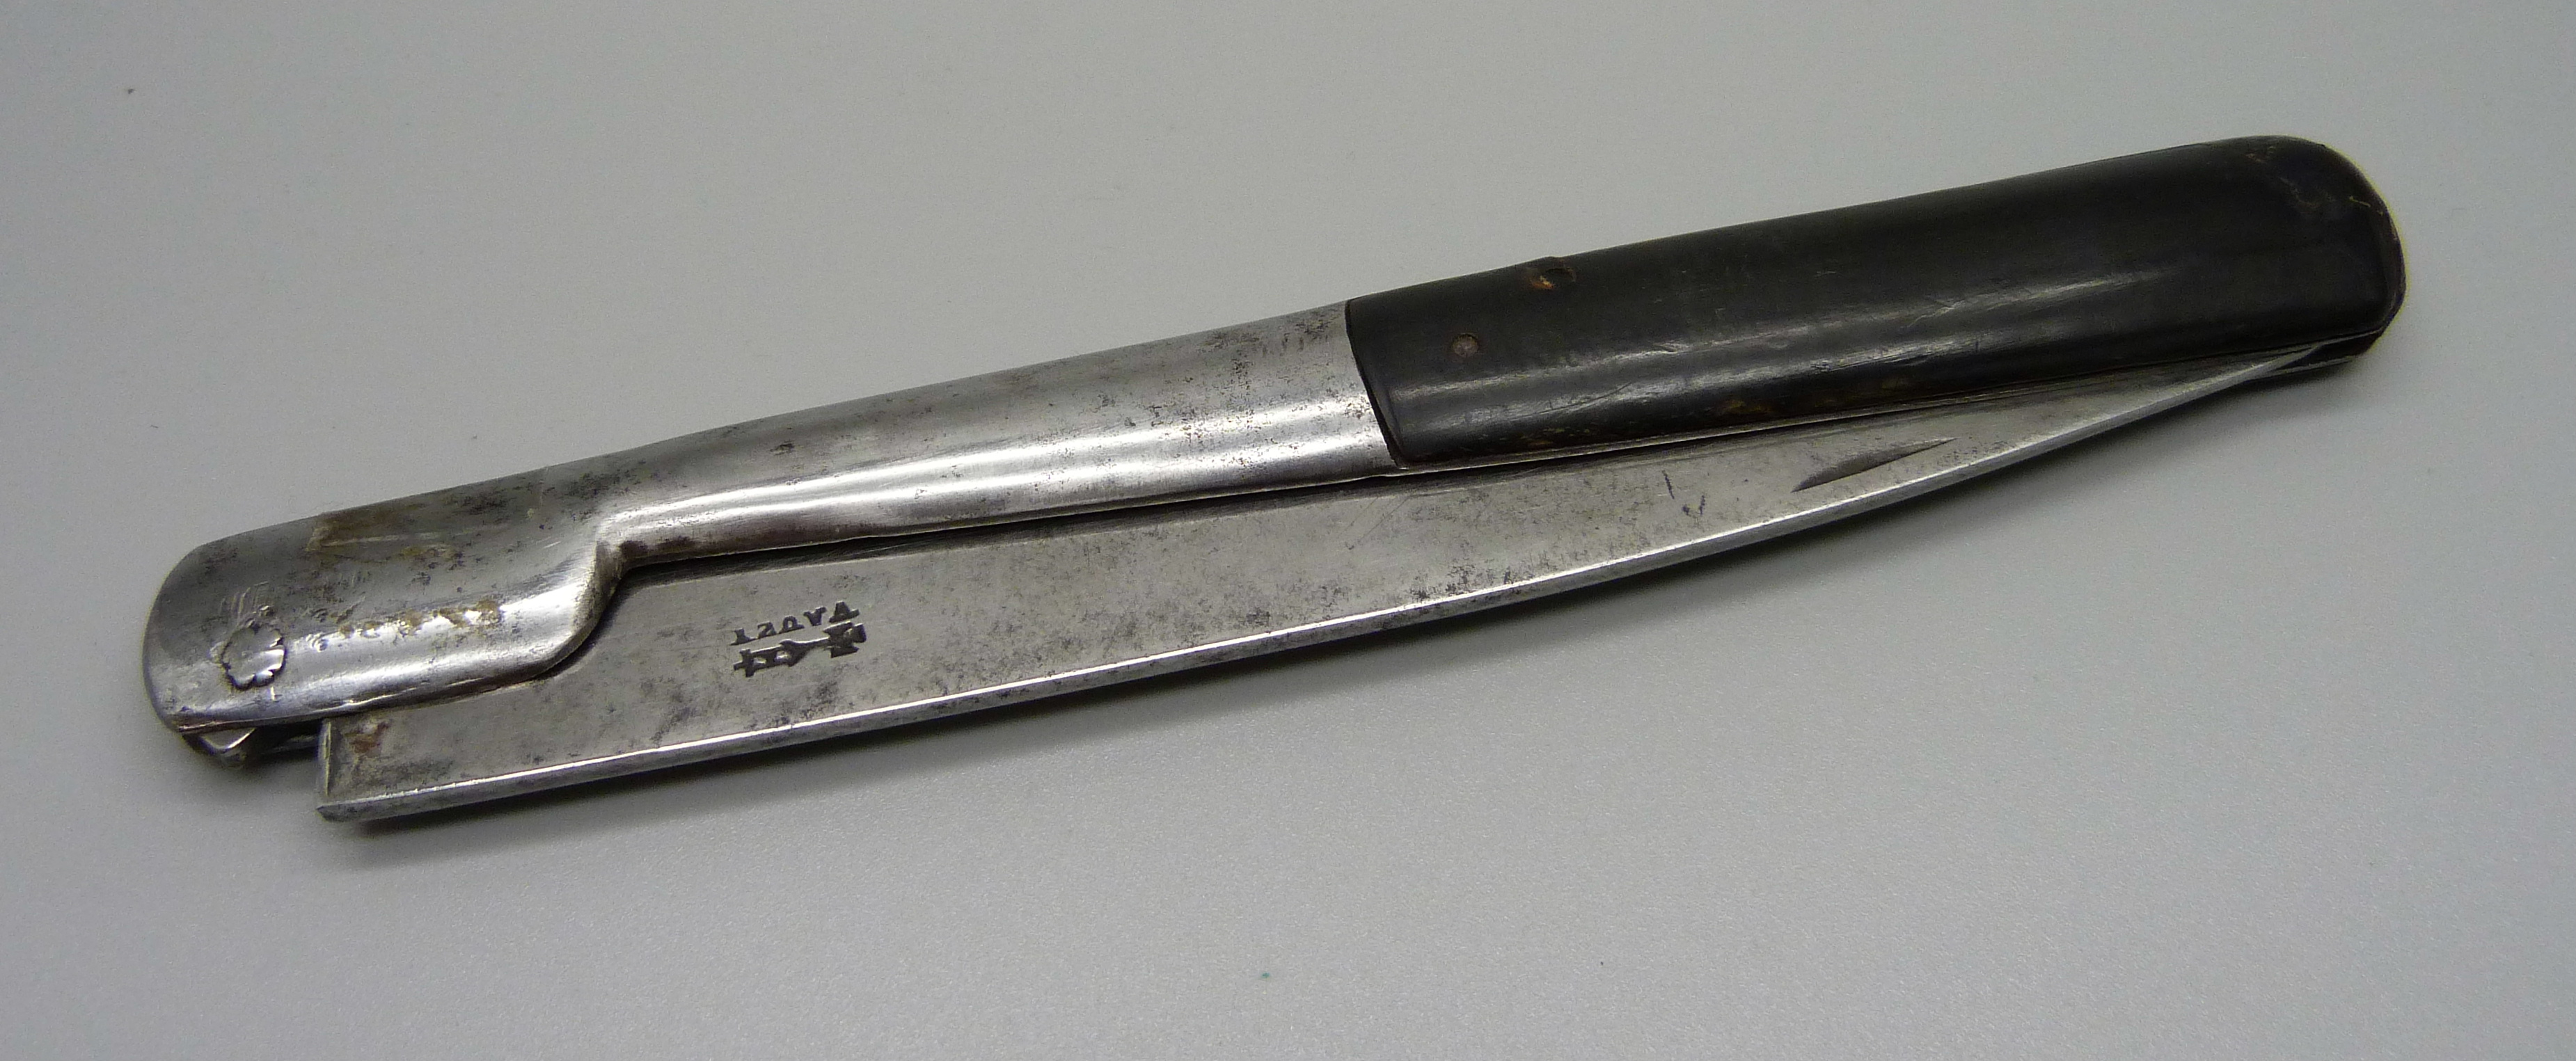 A Louis Vauzy folding knife with horn handle, 35cm open